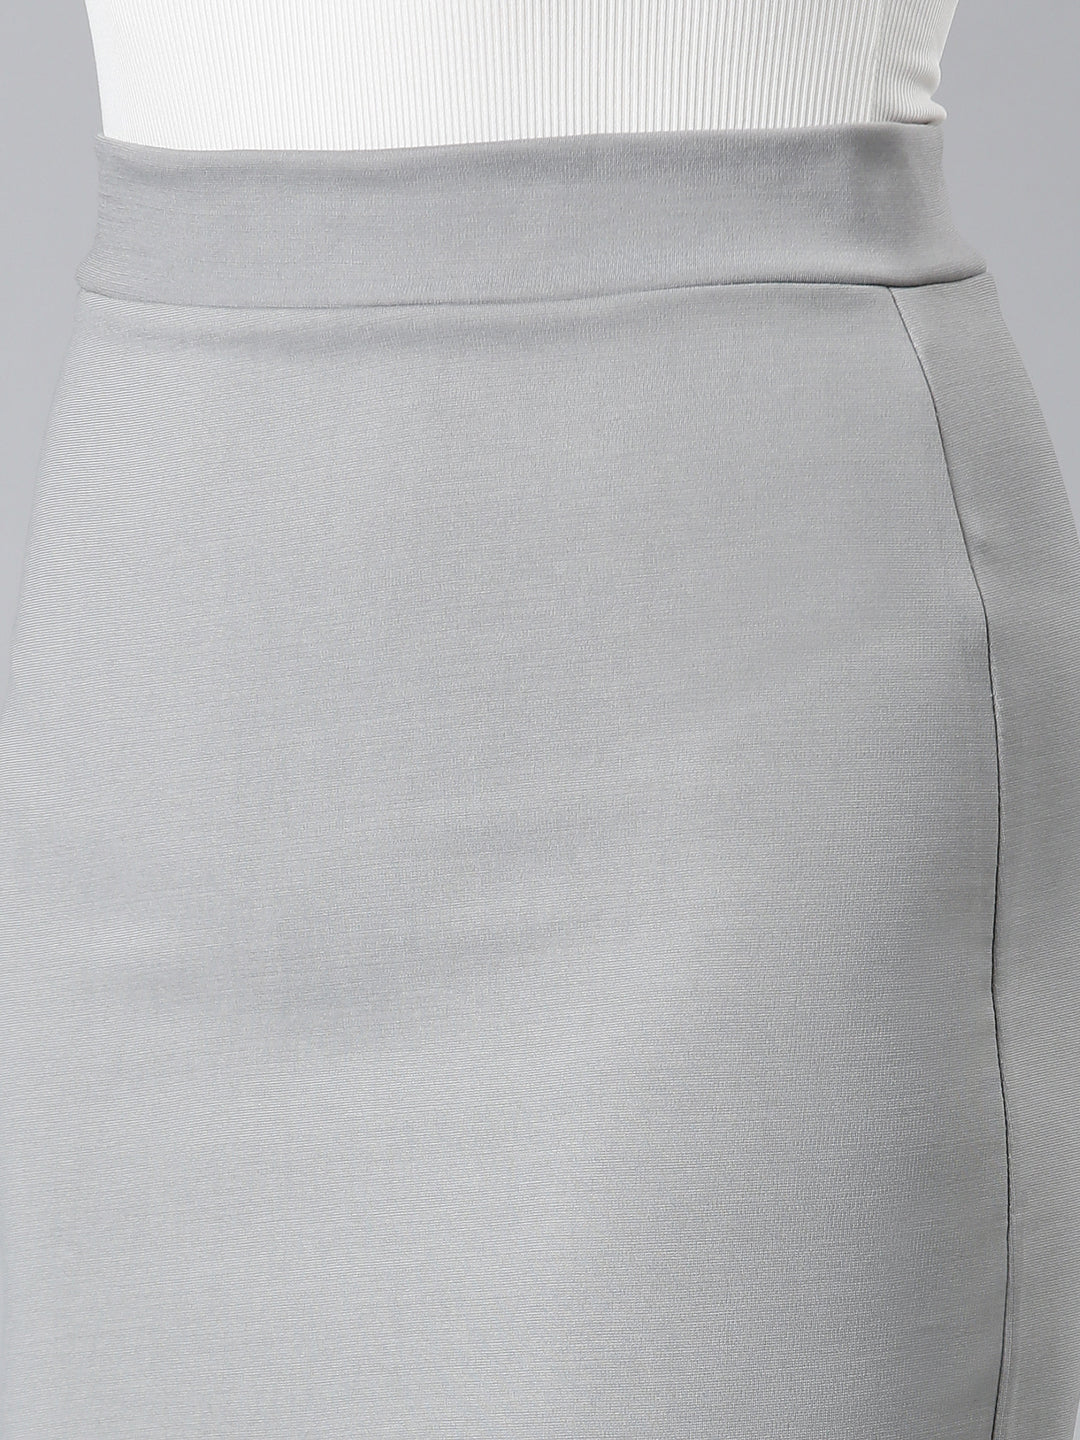 Women Grey Solid Pencil Skirt